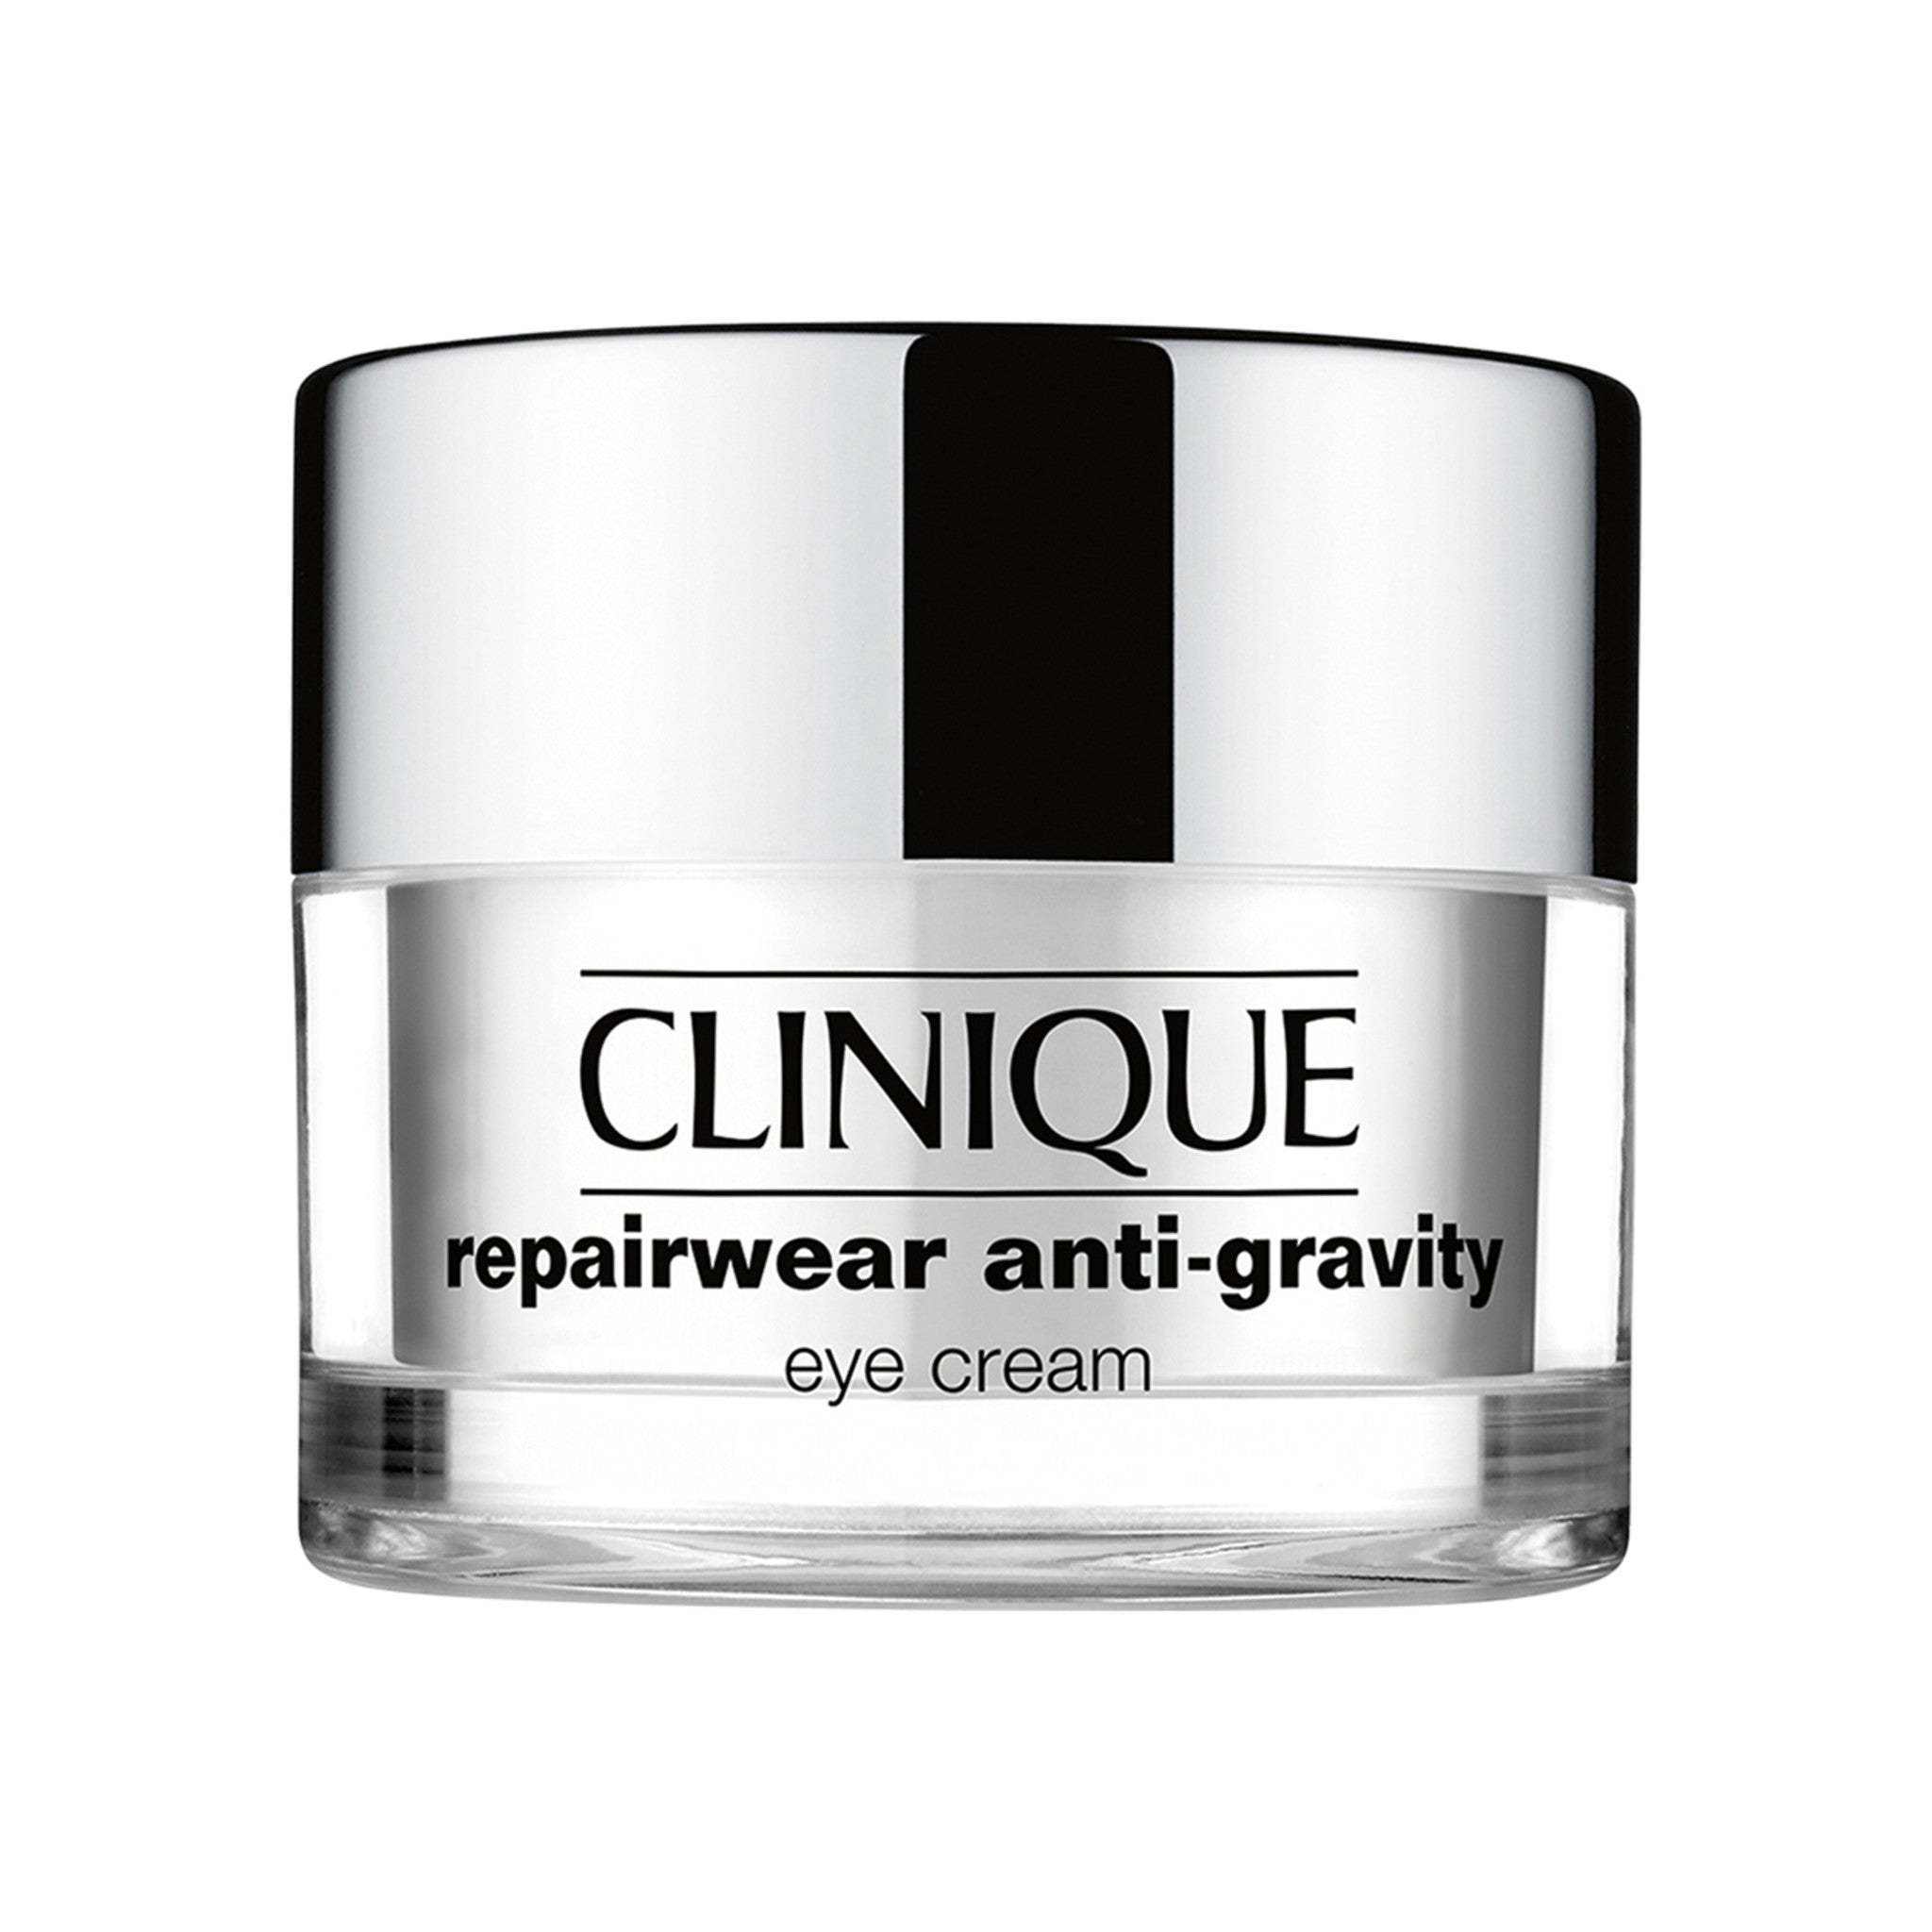 Clinique Repairwear Anti-Gravity Eye Cream Size variant: .5 OZ main image.